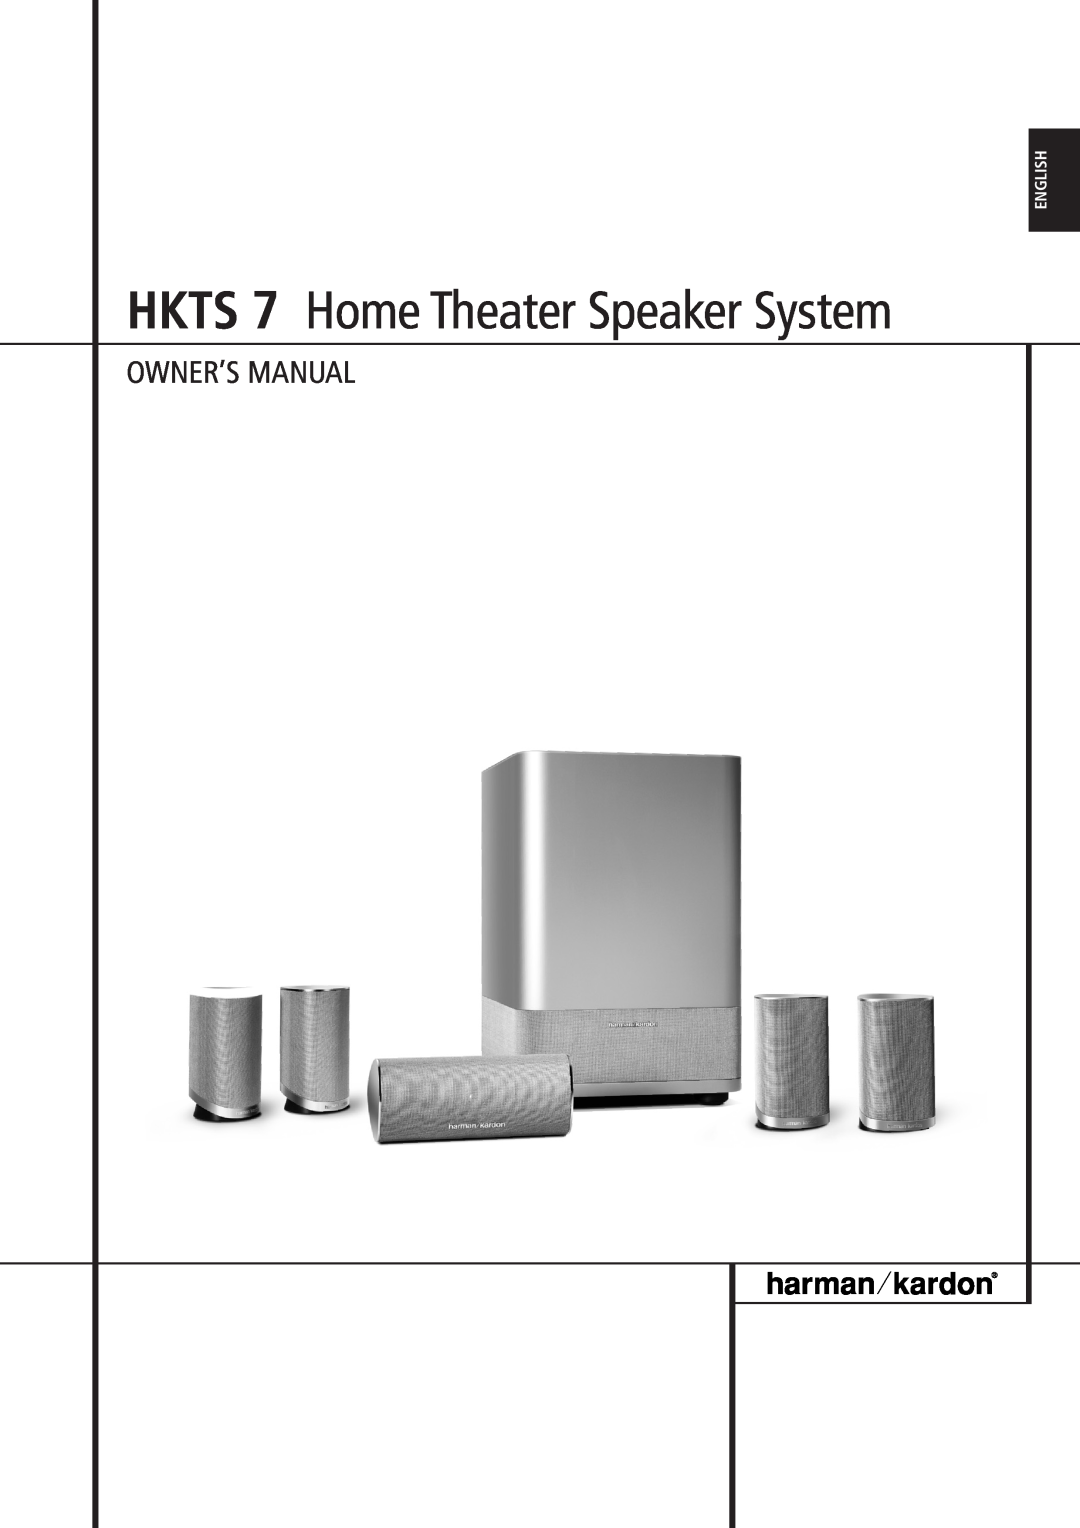 Harman-Kardon owner manual English, HKTS 7 Home Theater Speaker System 